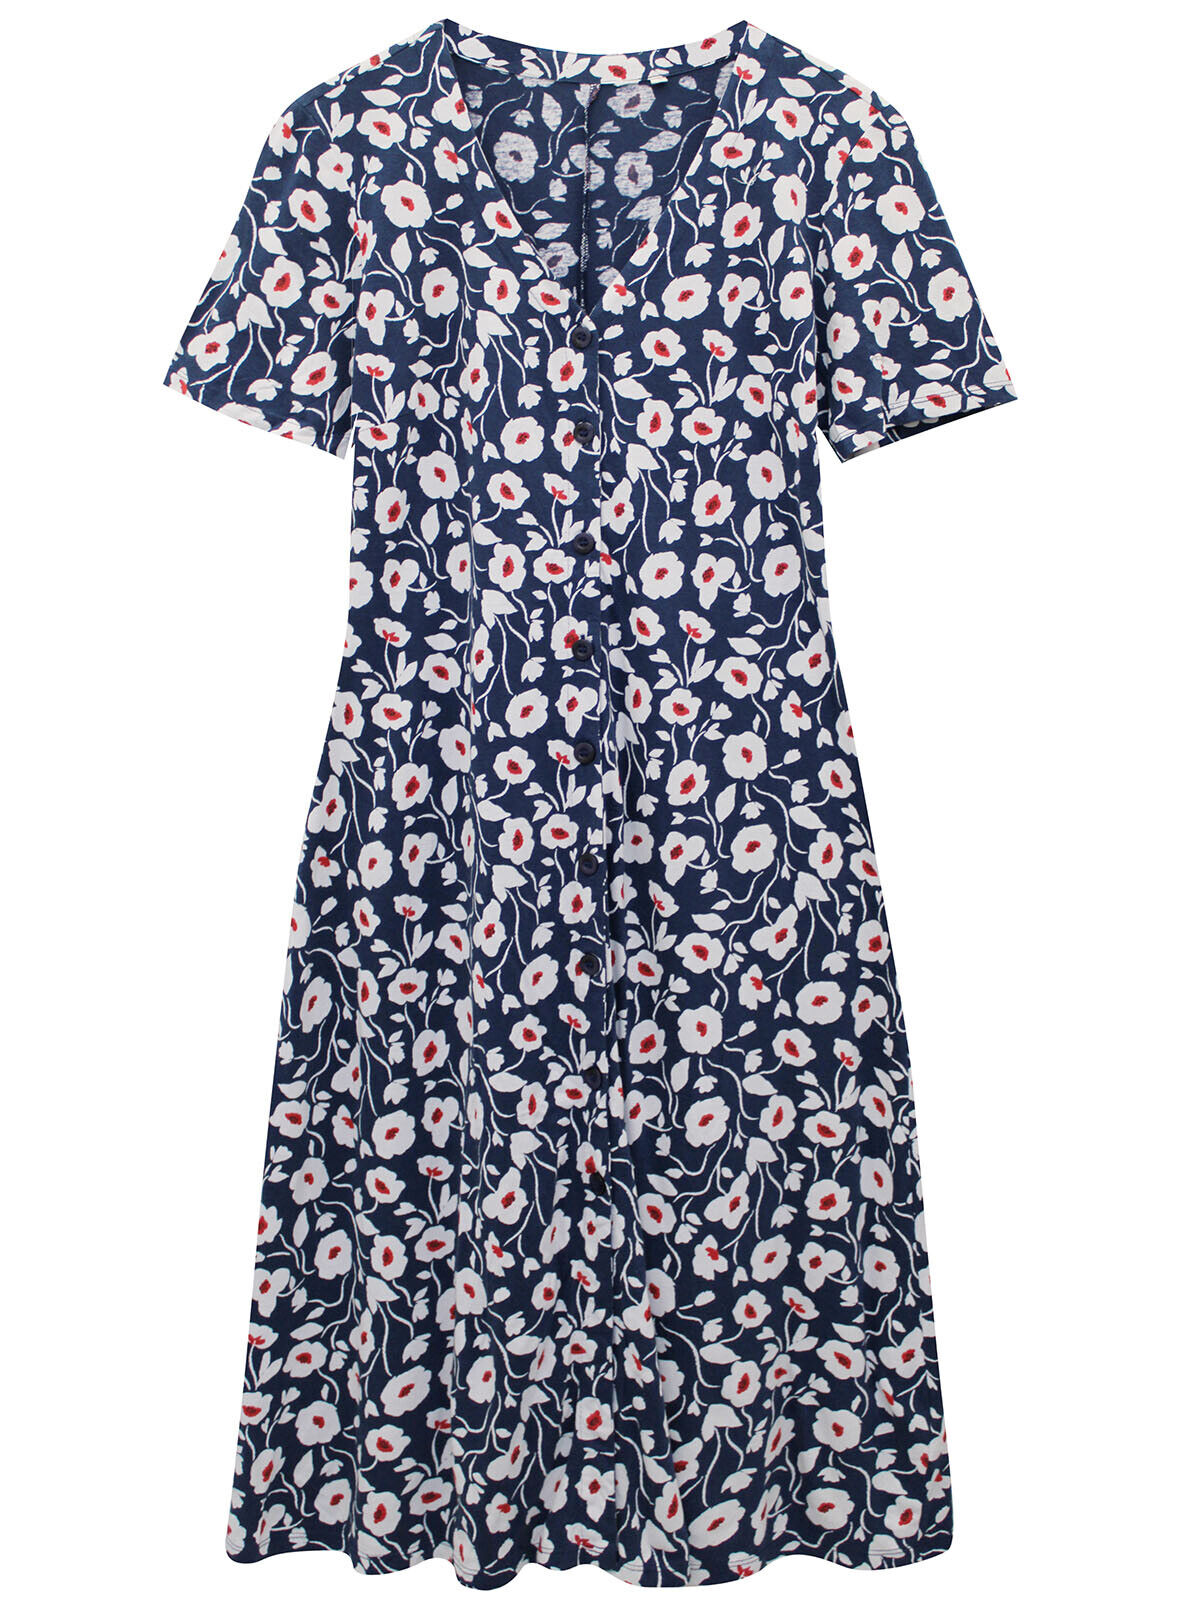 EX Seasalt Blue Paper Bloom Squall Lilian Tea Dress Sizes 12, 14, 16, 18 RRP £60